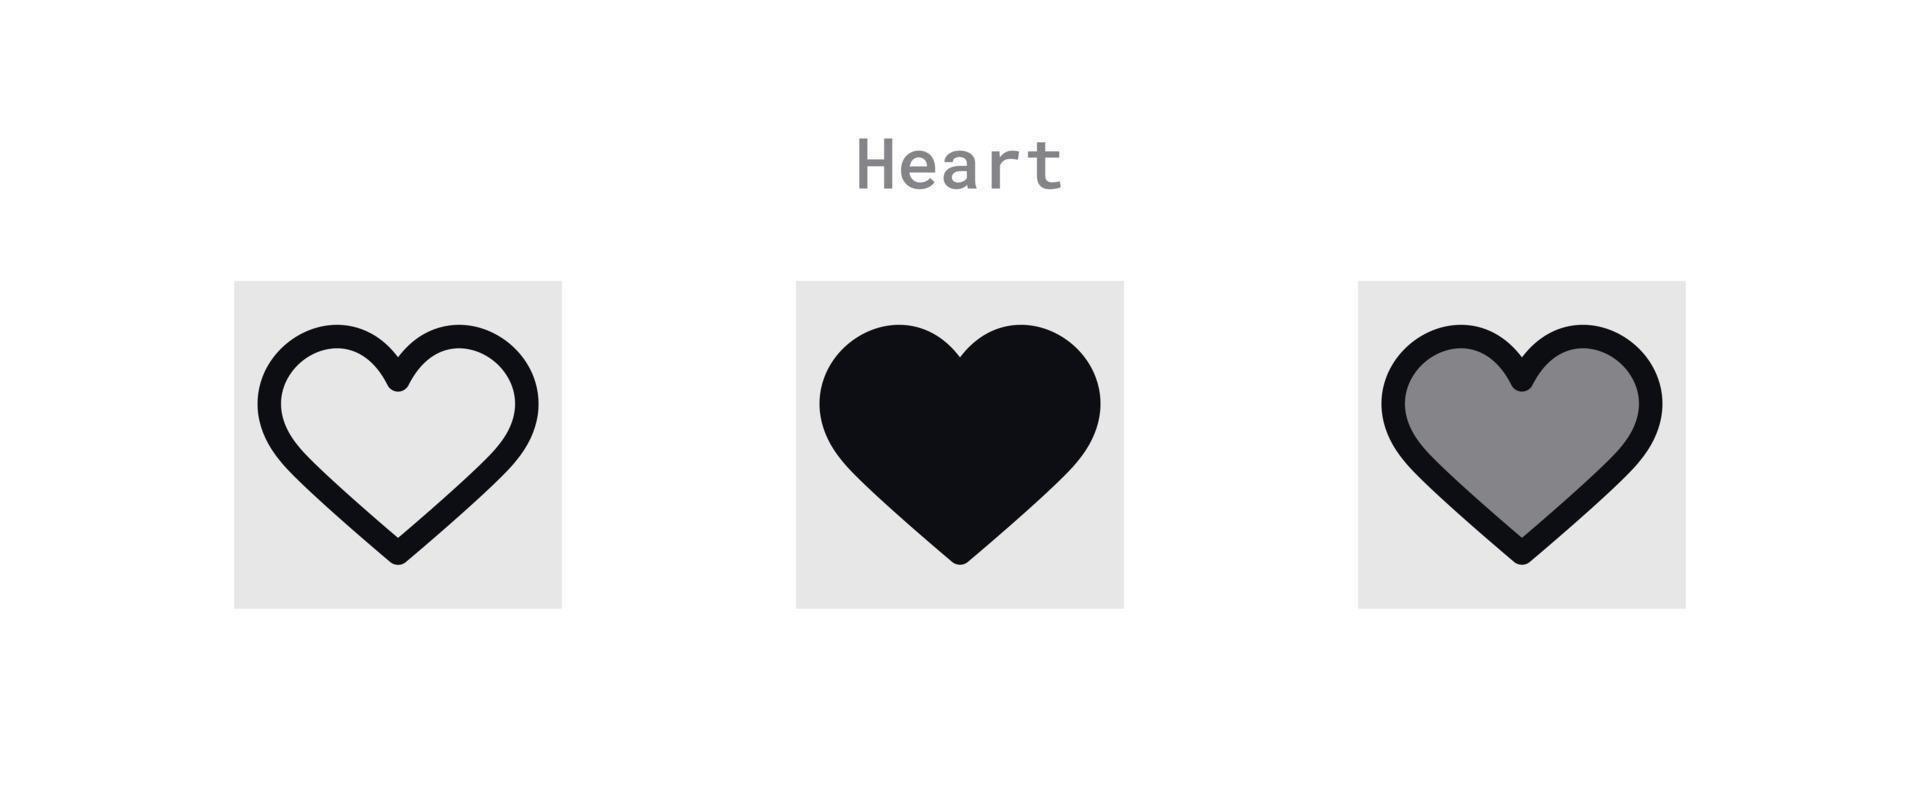 Heart Icons Sheet vector